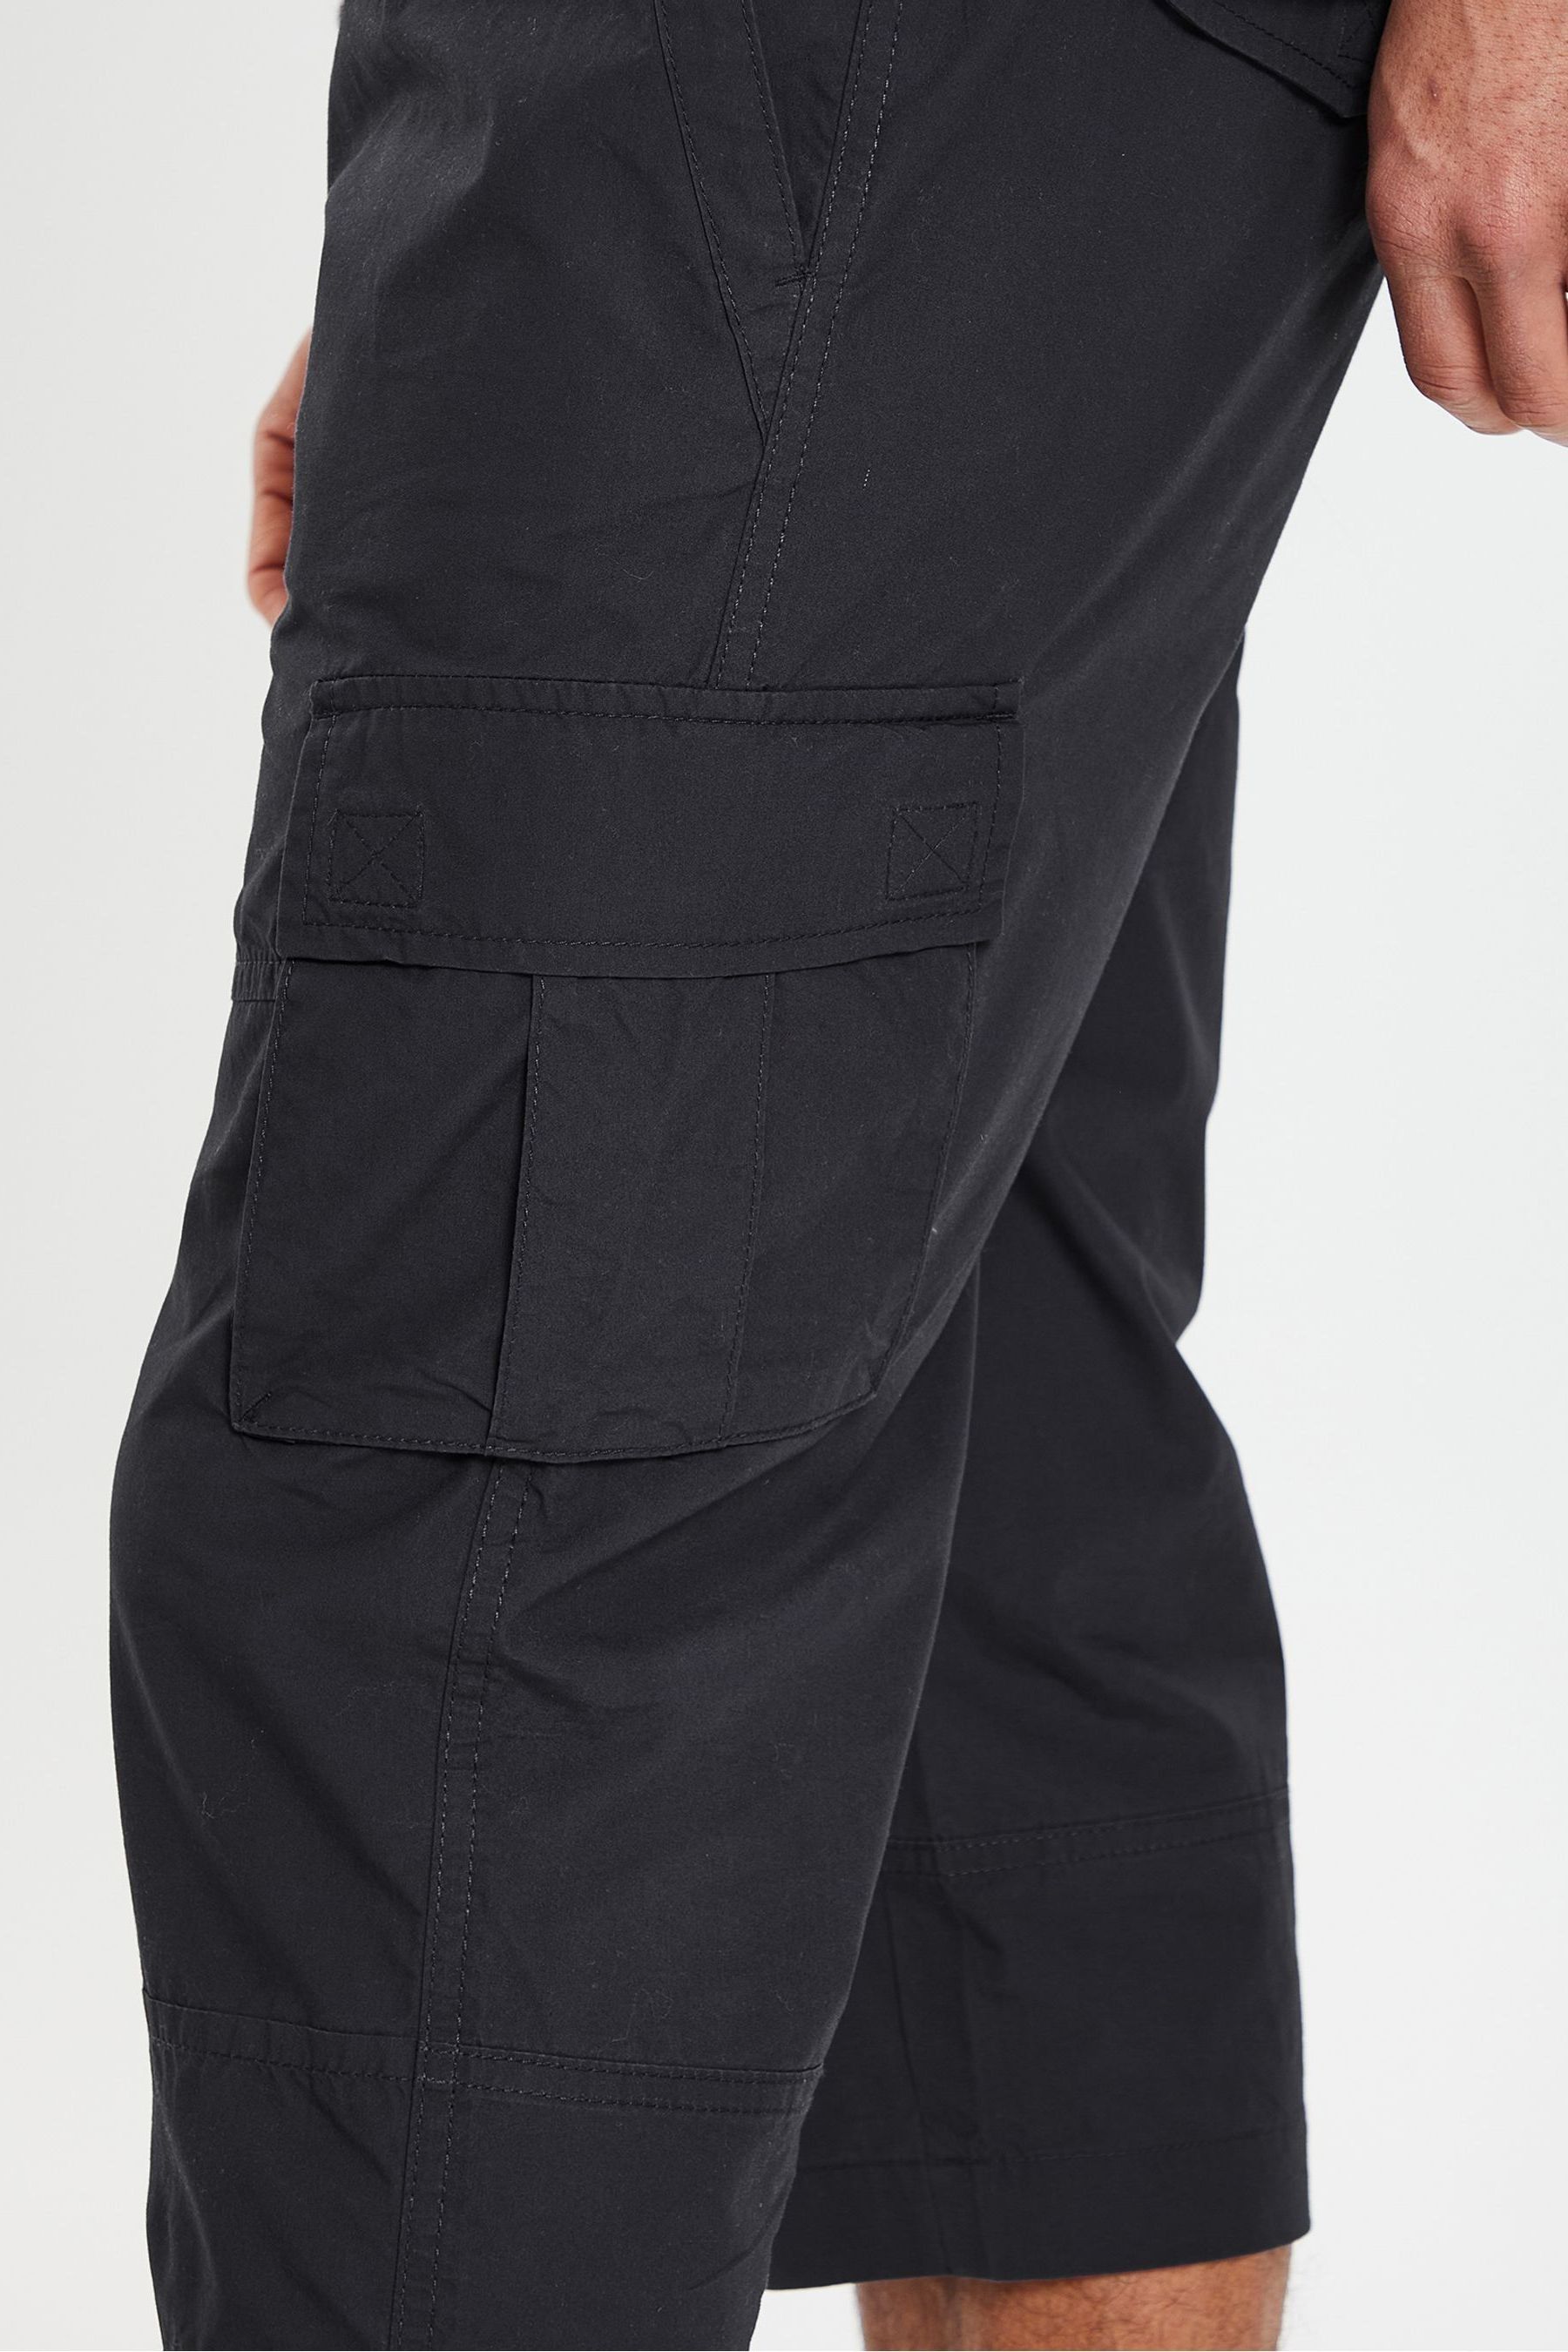 Men 34 Length Cargo Pants Shorts Loose Casual Cotton Trousers Plus Size  Black  eBay